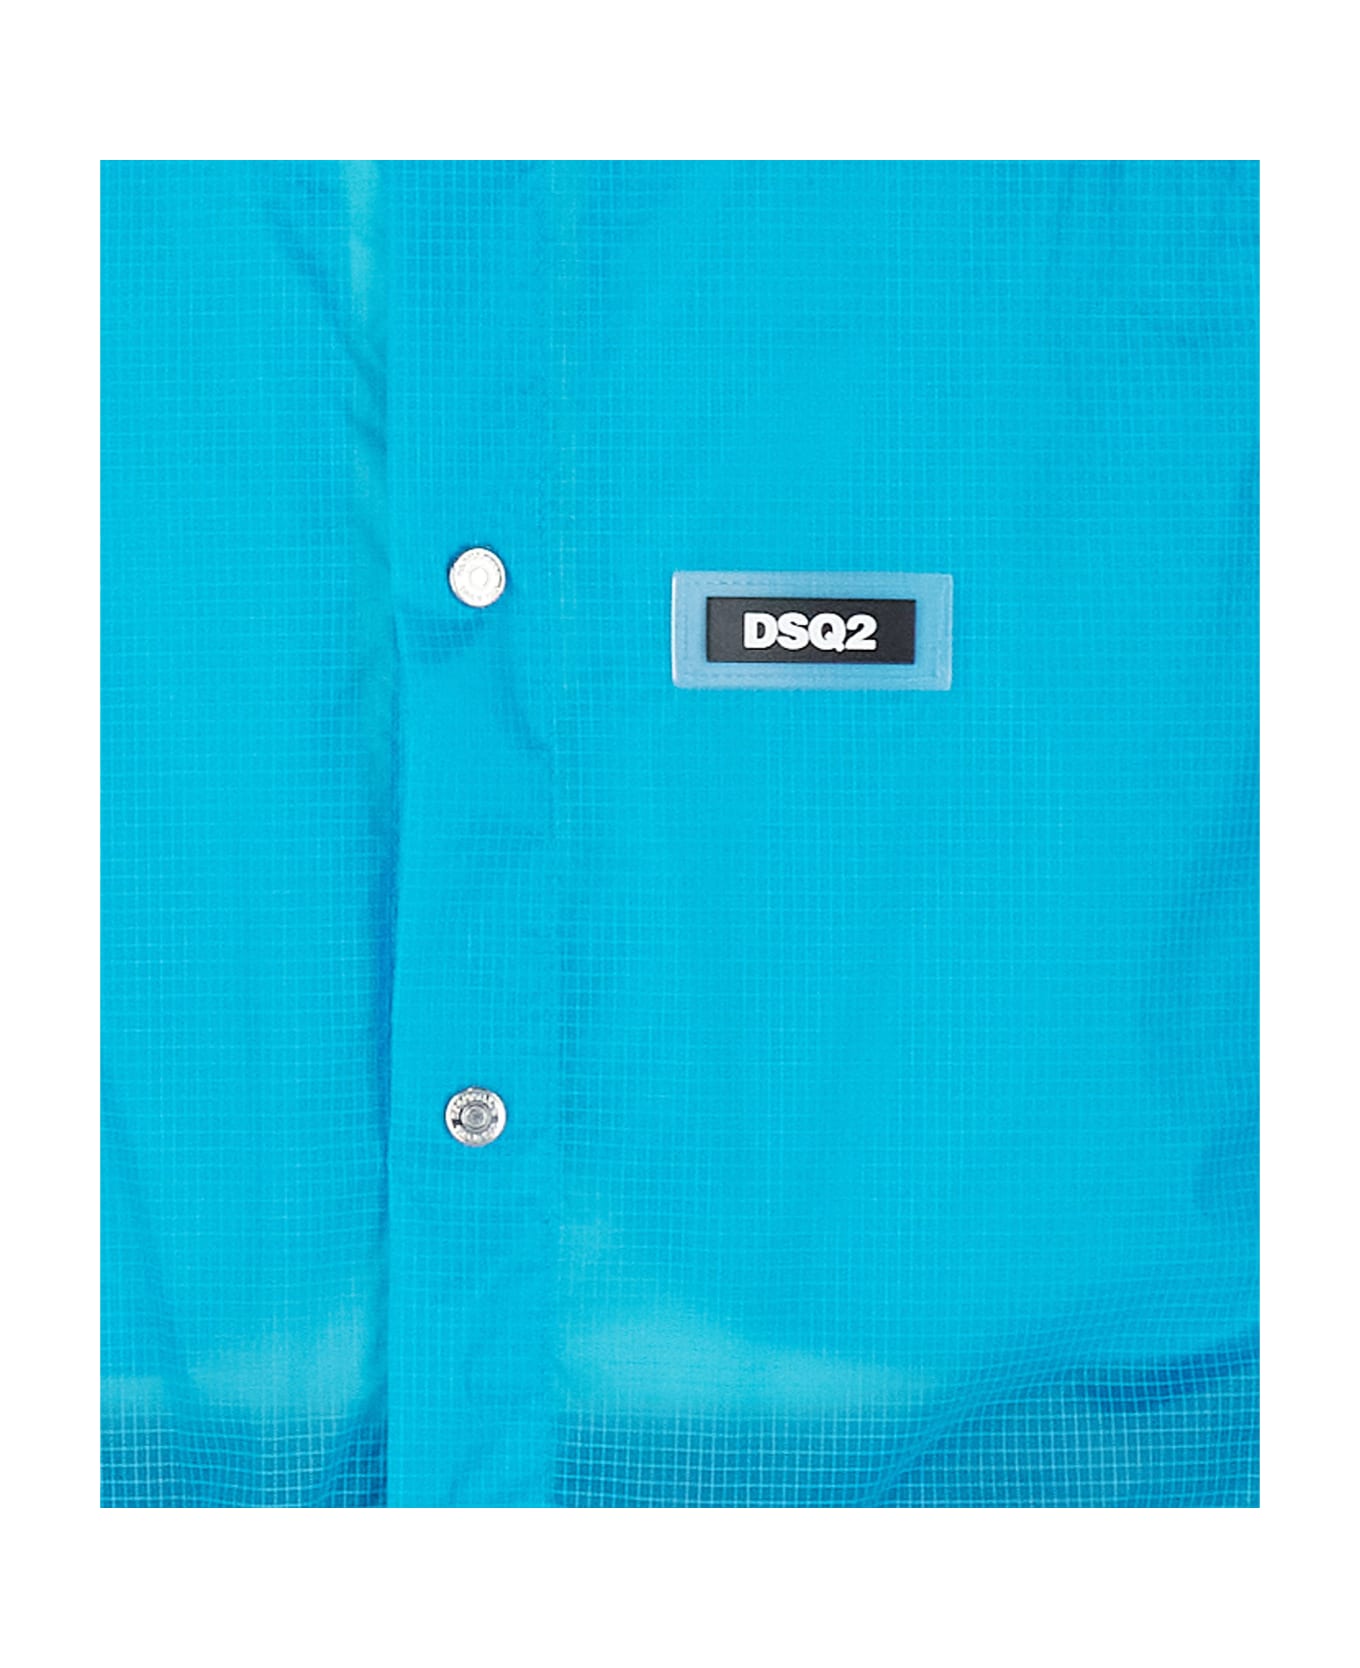 Dsquared2 Light Blue Nylon Jacket - Light blue シャツ